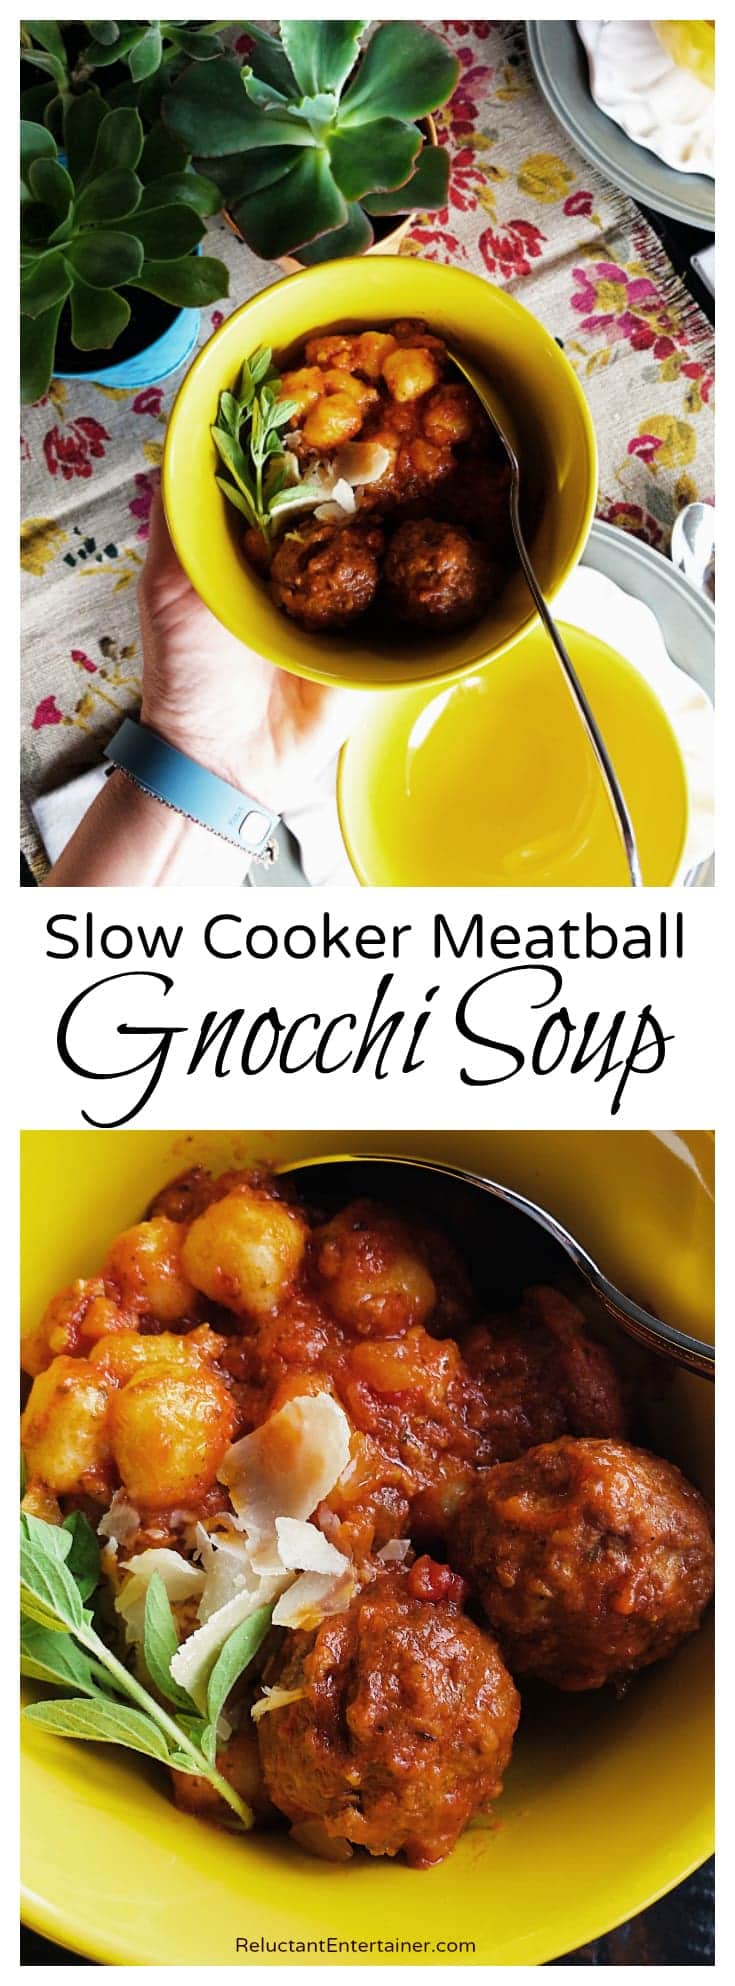 Slow Cooker Meatball Gnocchi Soup